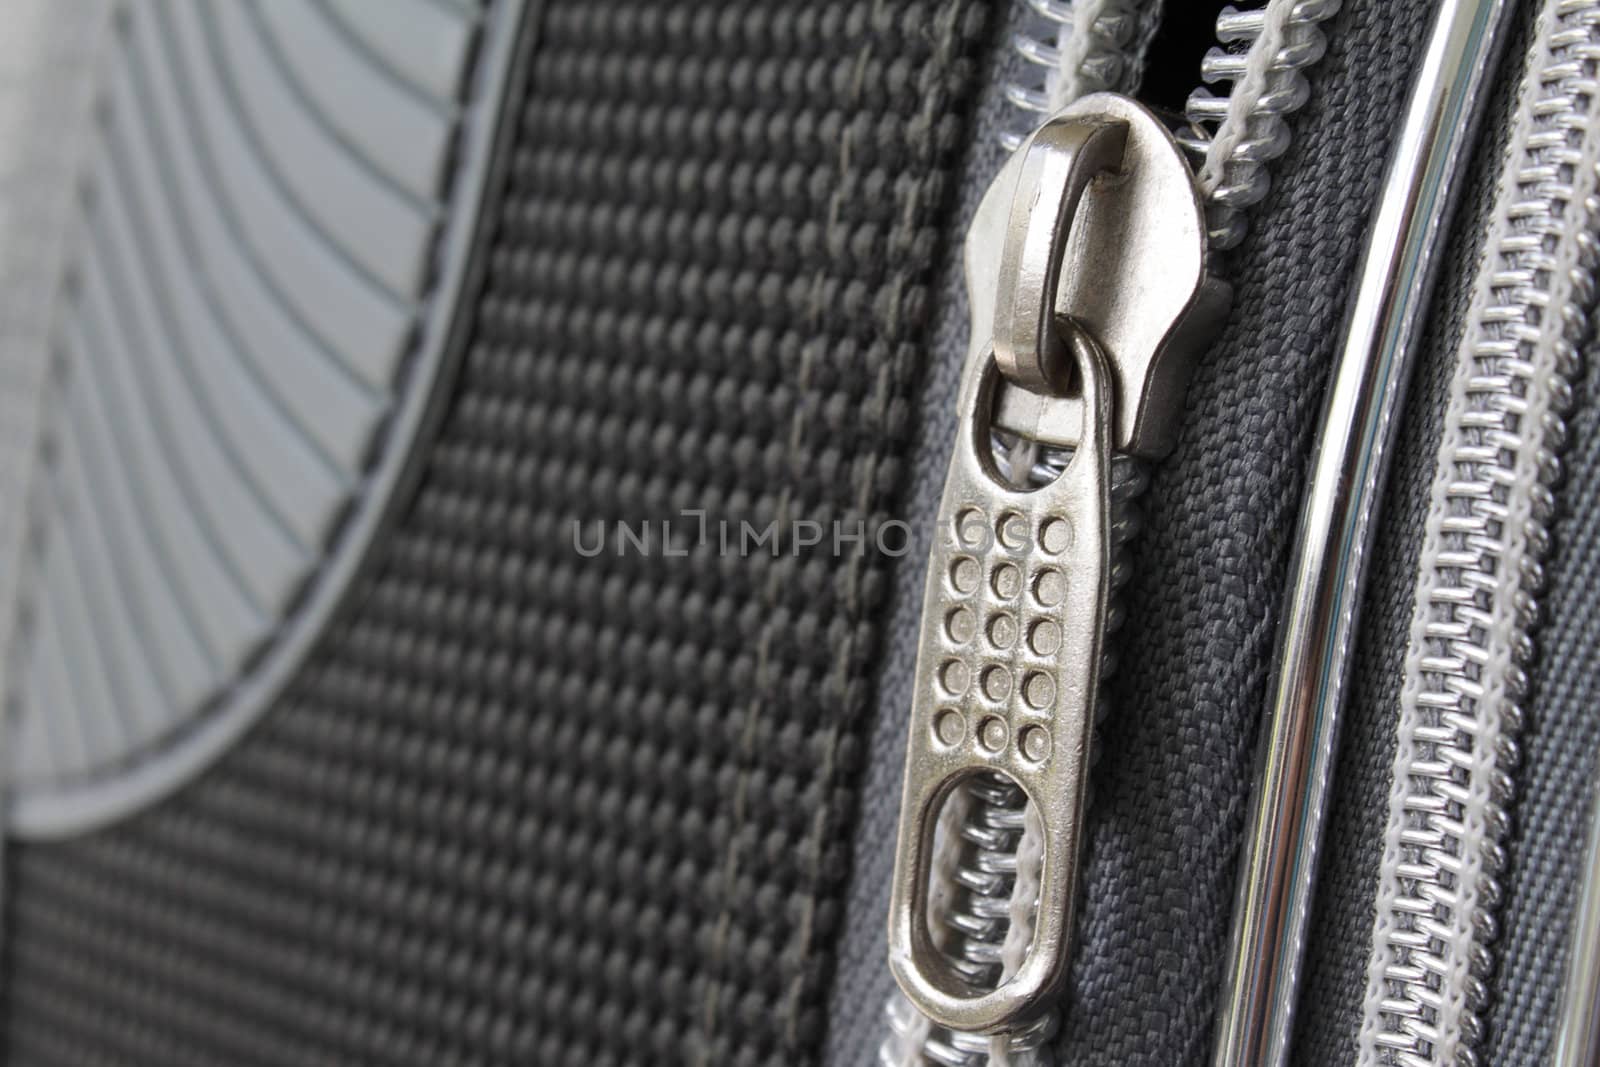 A zipper on suitcase by pulen